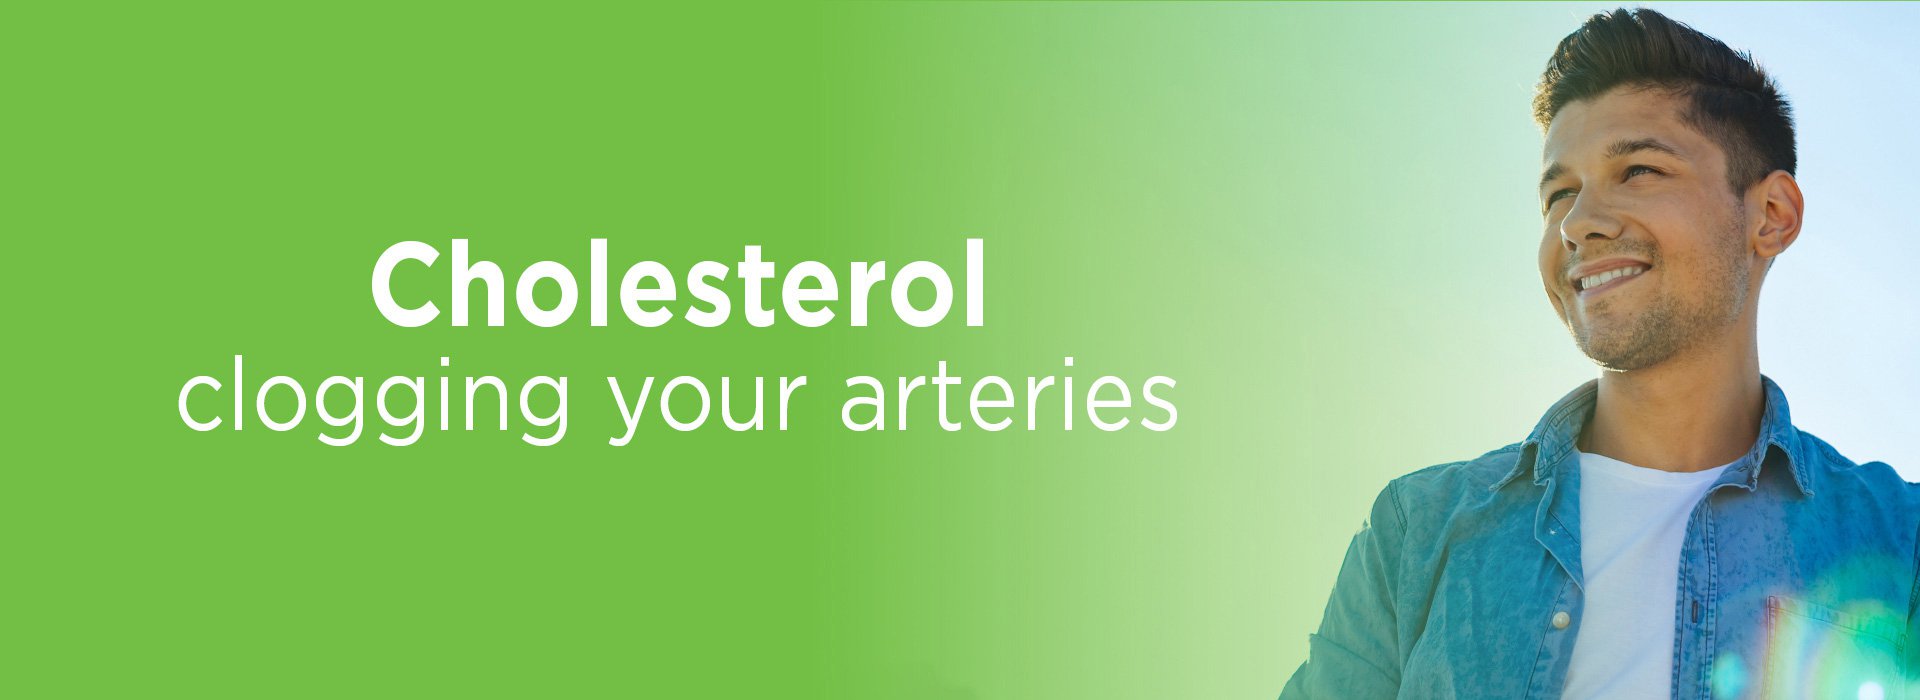 New Image International:Cholesterol - clogging your arteries